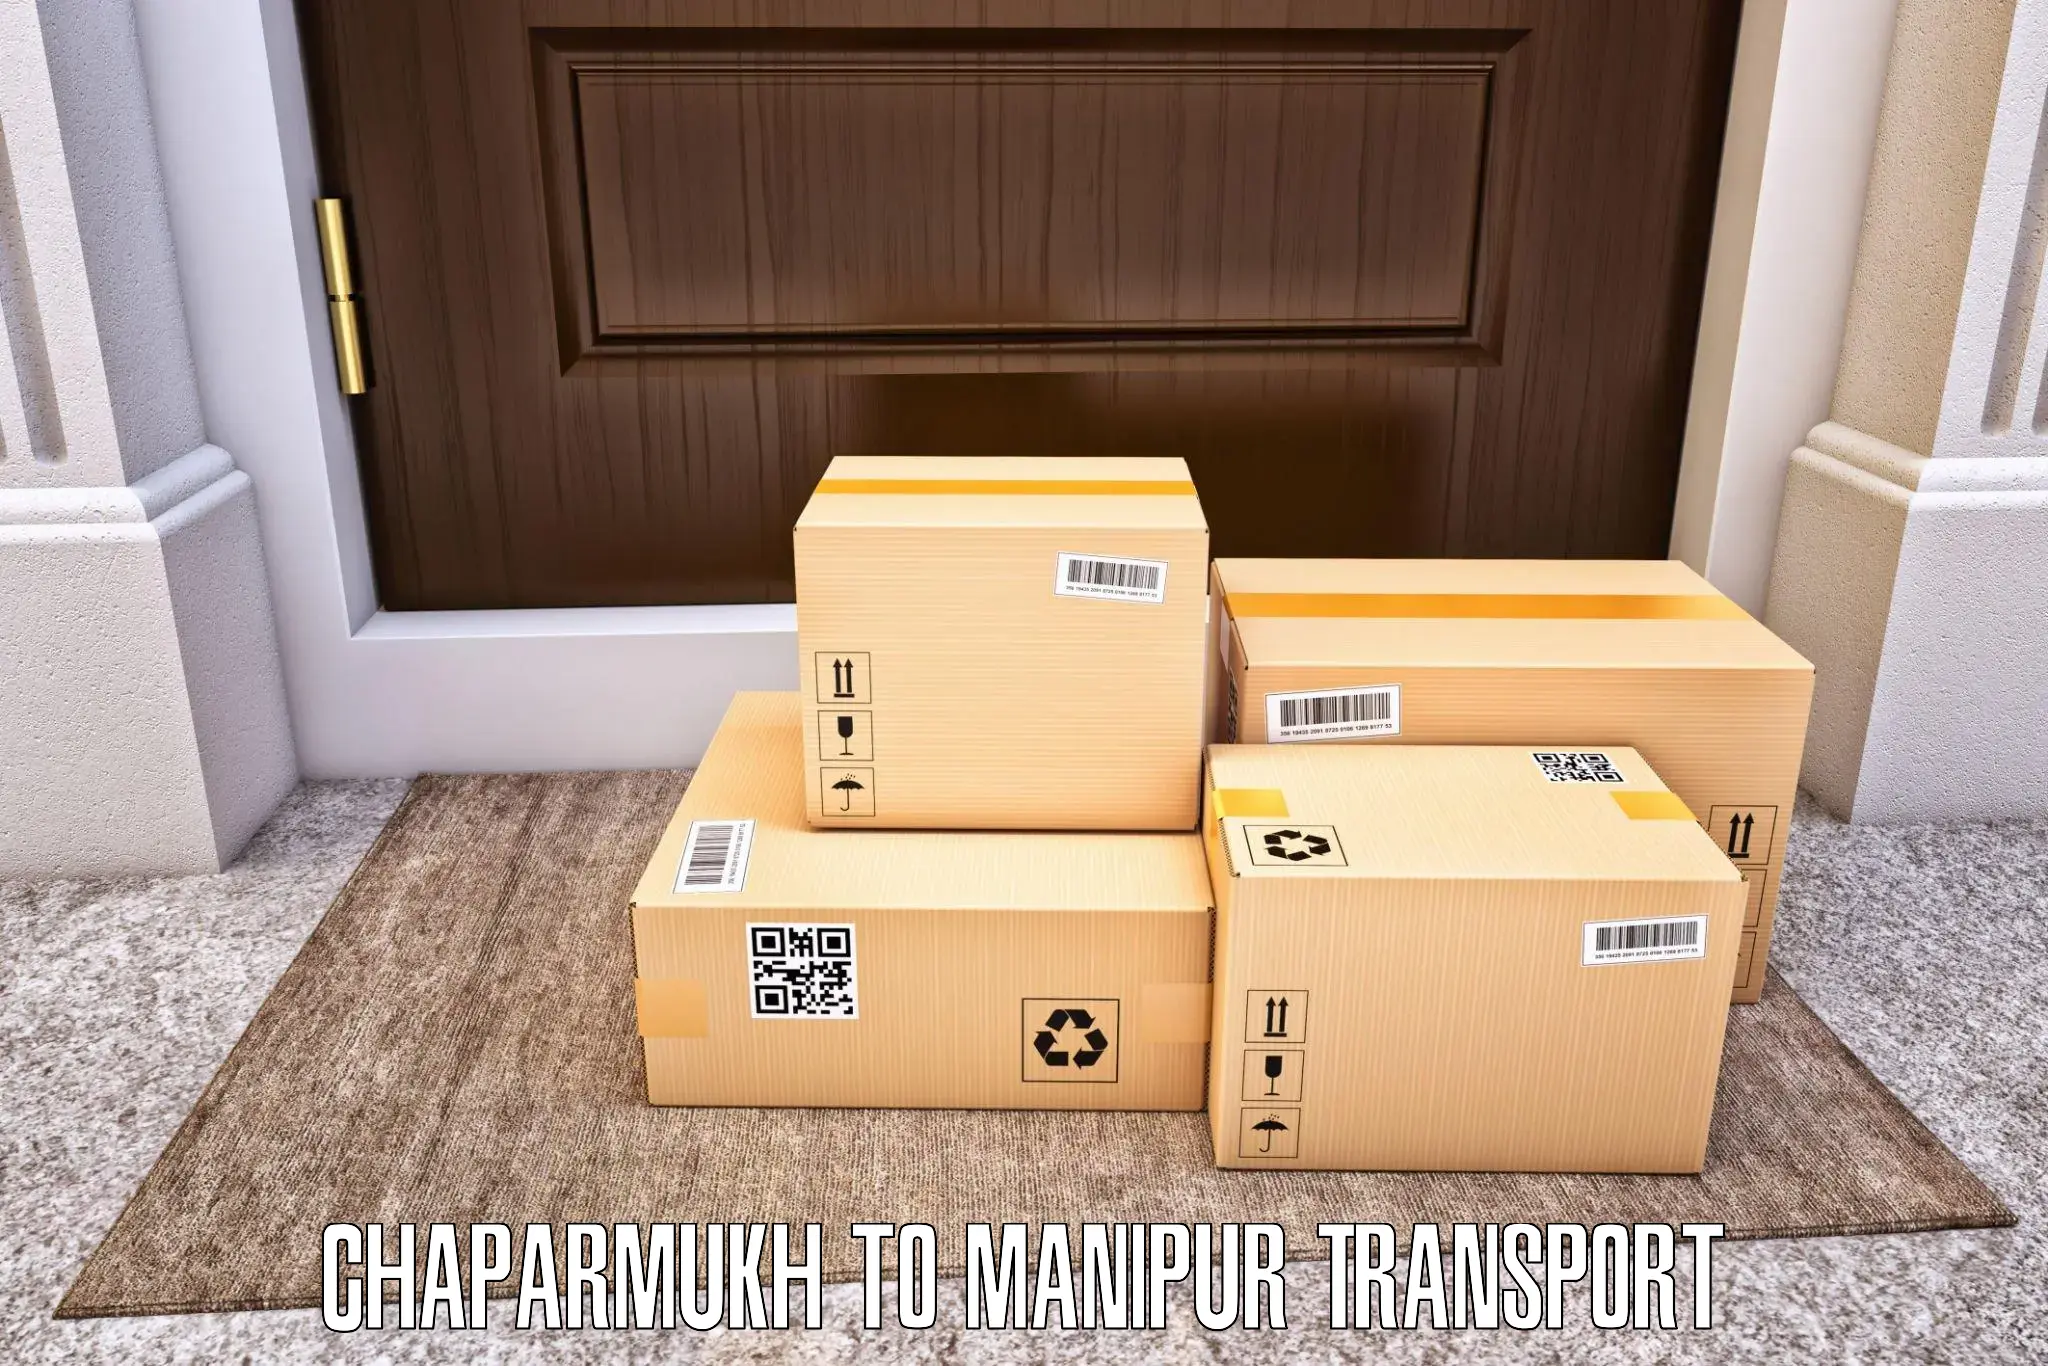 Daily transport service Chaparmukh to Senapati